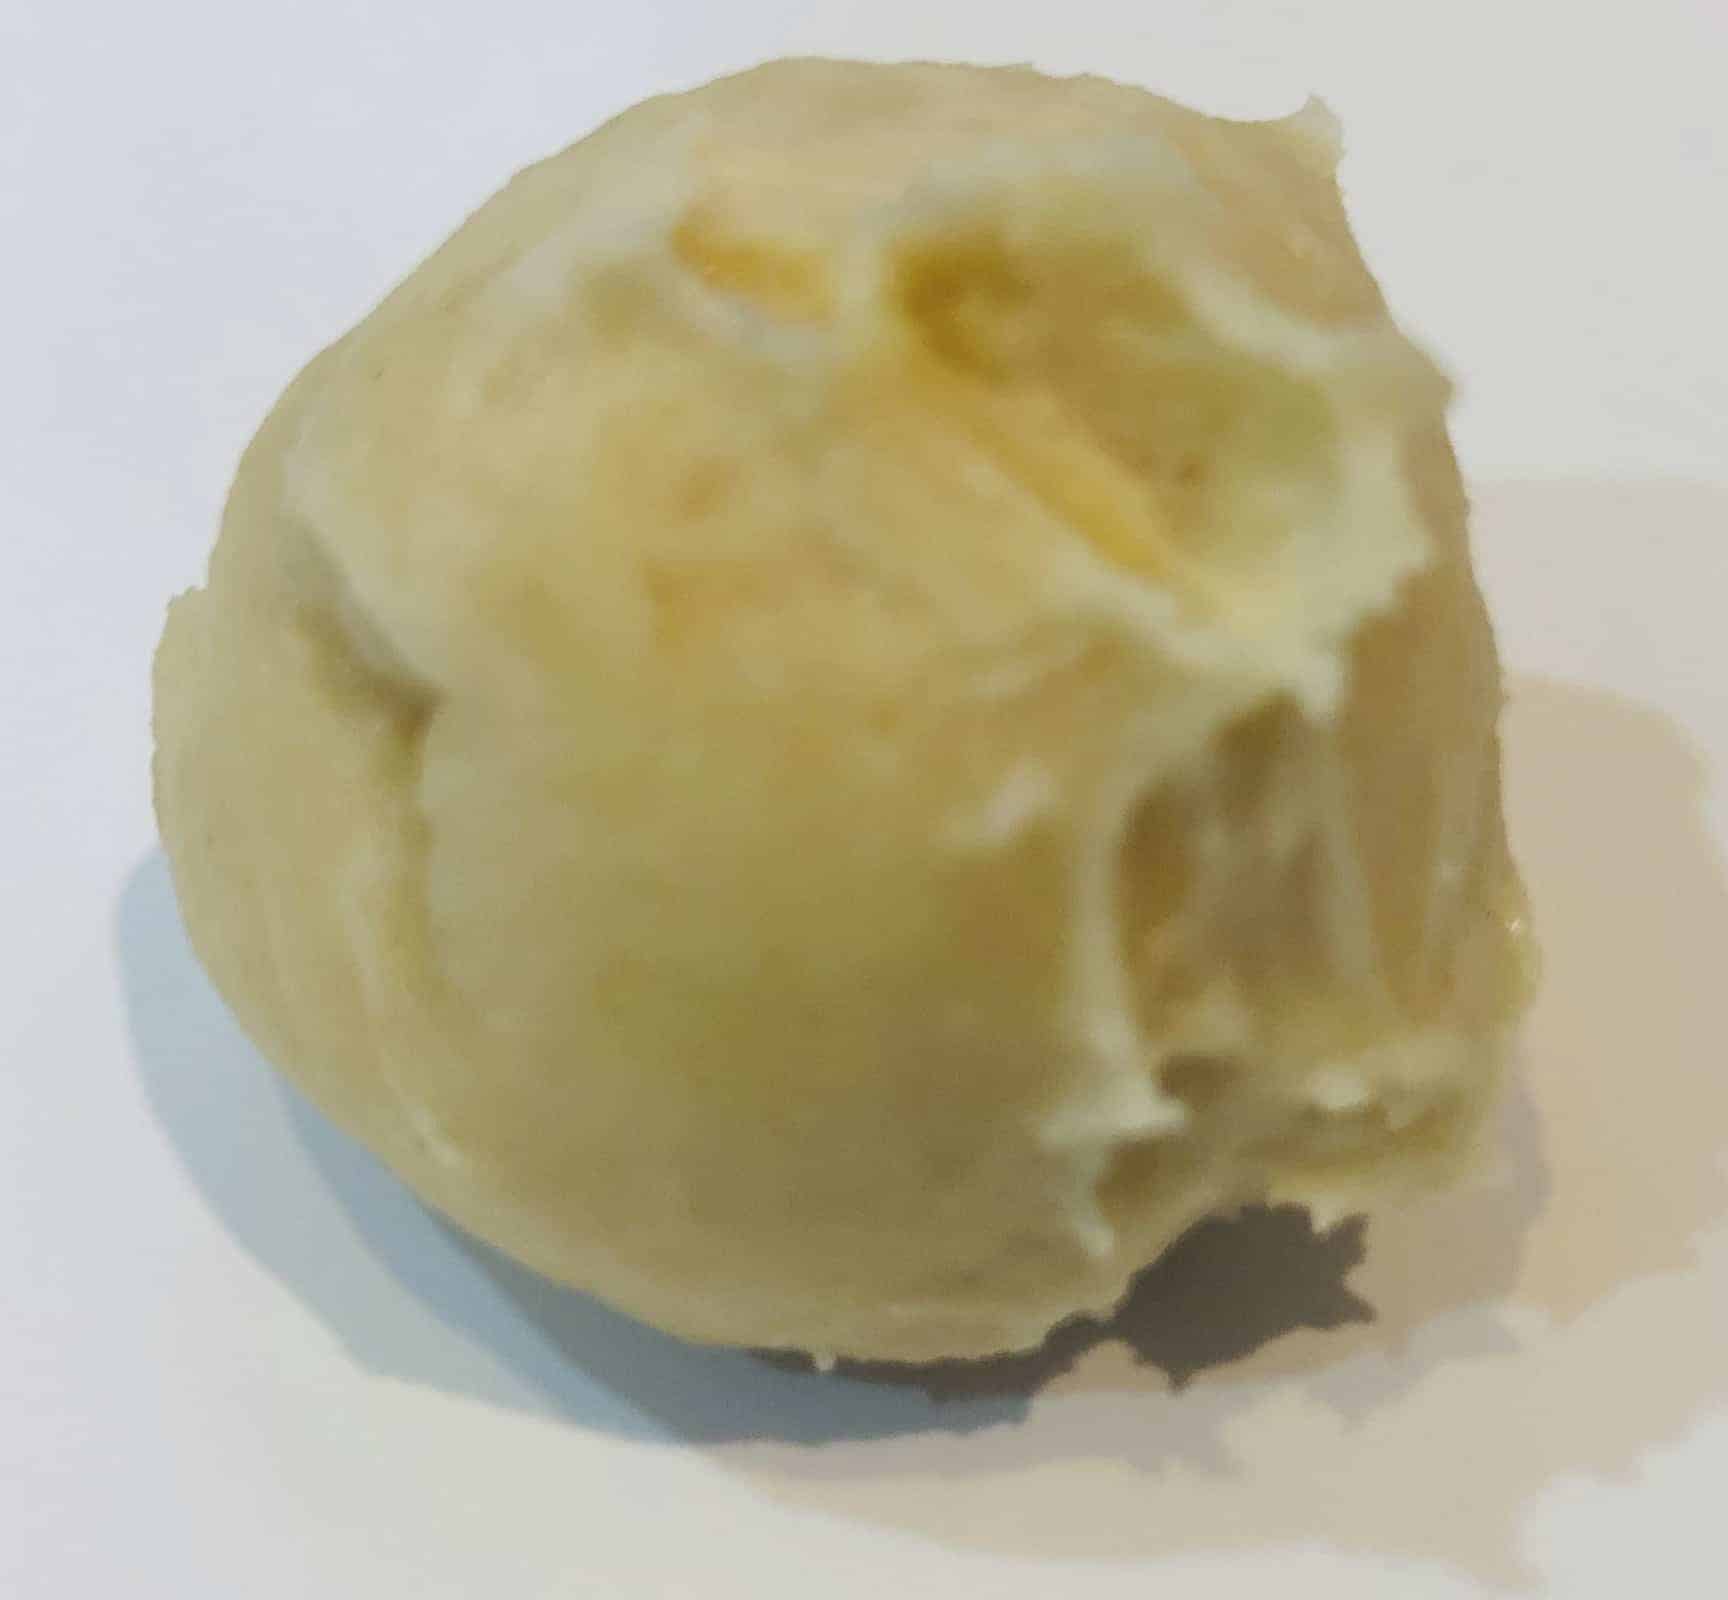 Round dough ball